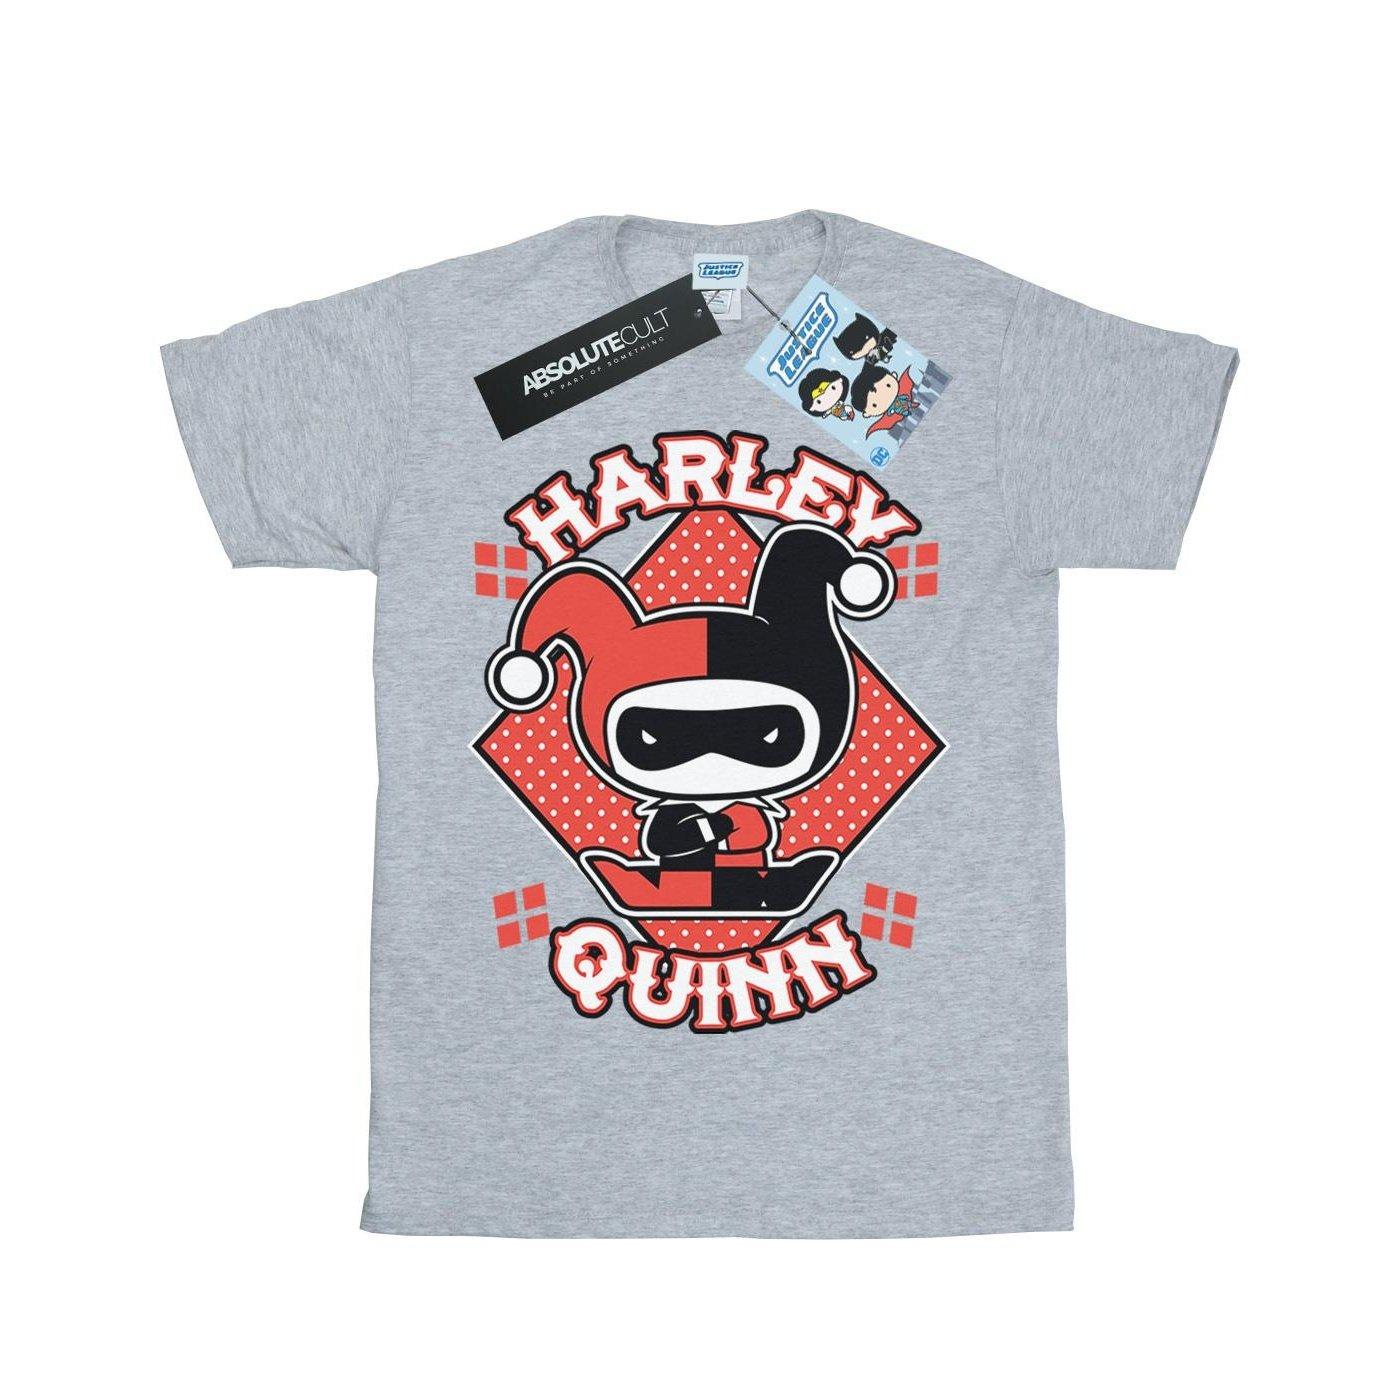 Tshirt Mädchen Grau 140/146 von Harley Quinn